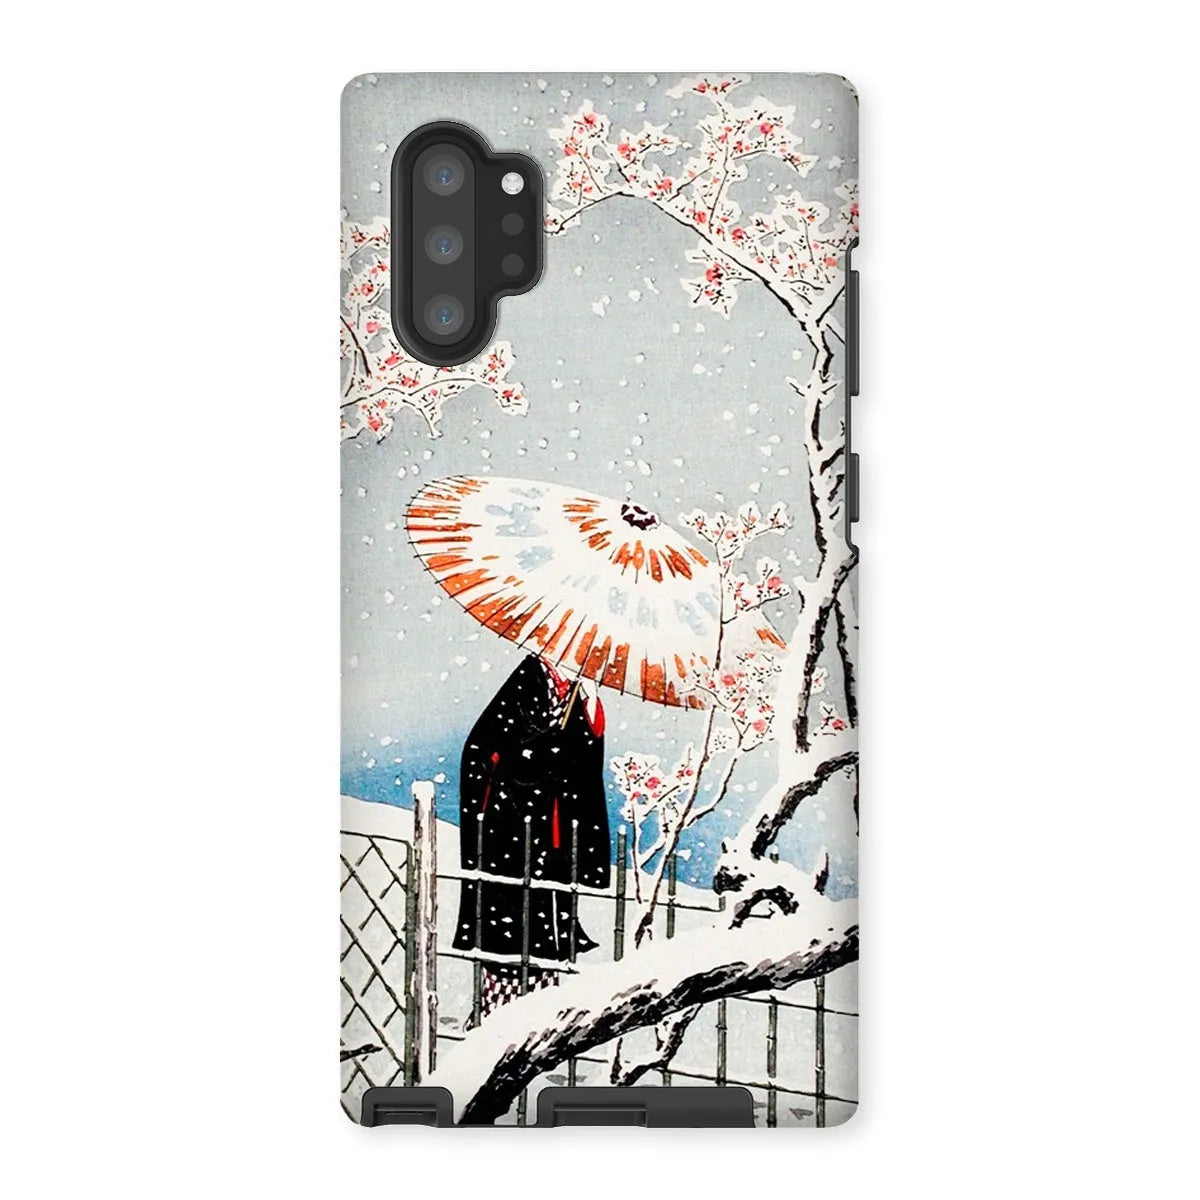 Plum Tree In Snow - Shin-hanga Phone Case - Hiroaki Takahashi - Samsung Galaxy Note 10p / Matte - Mobile Phone Cases